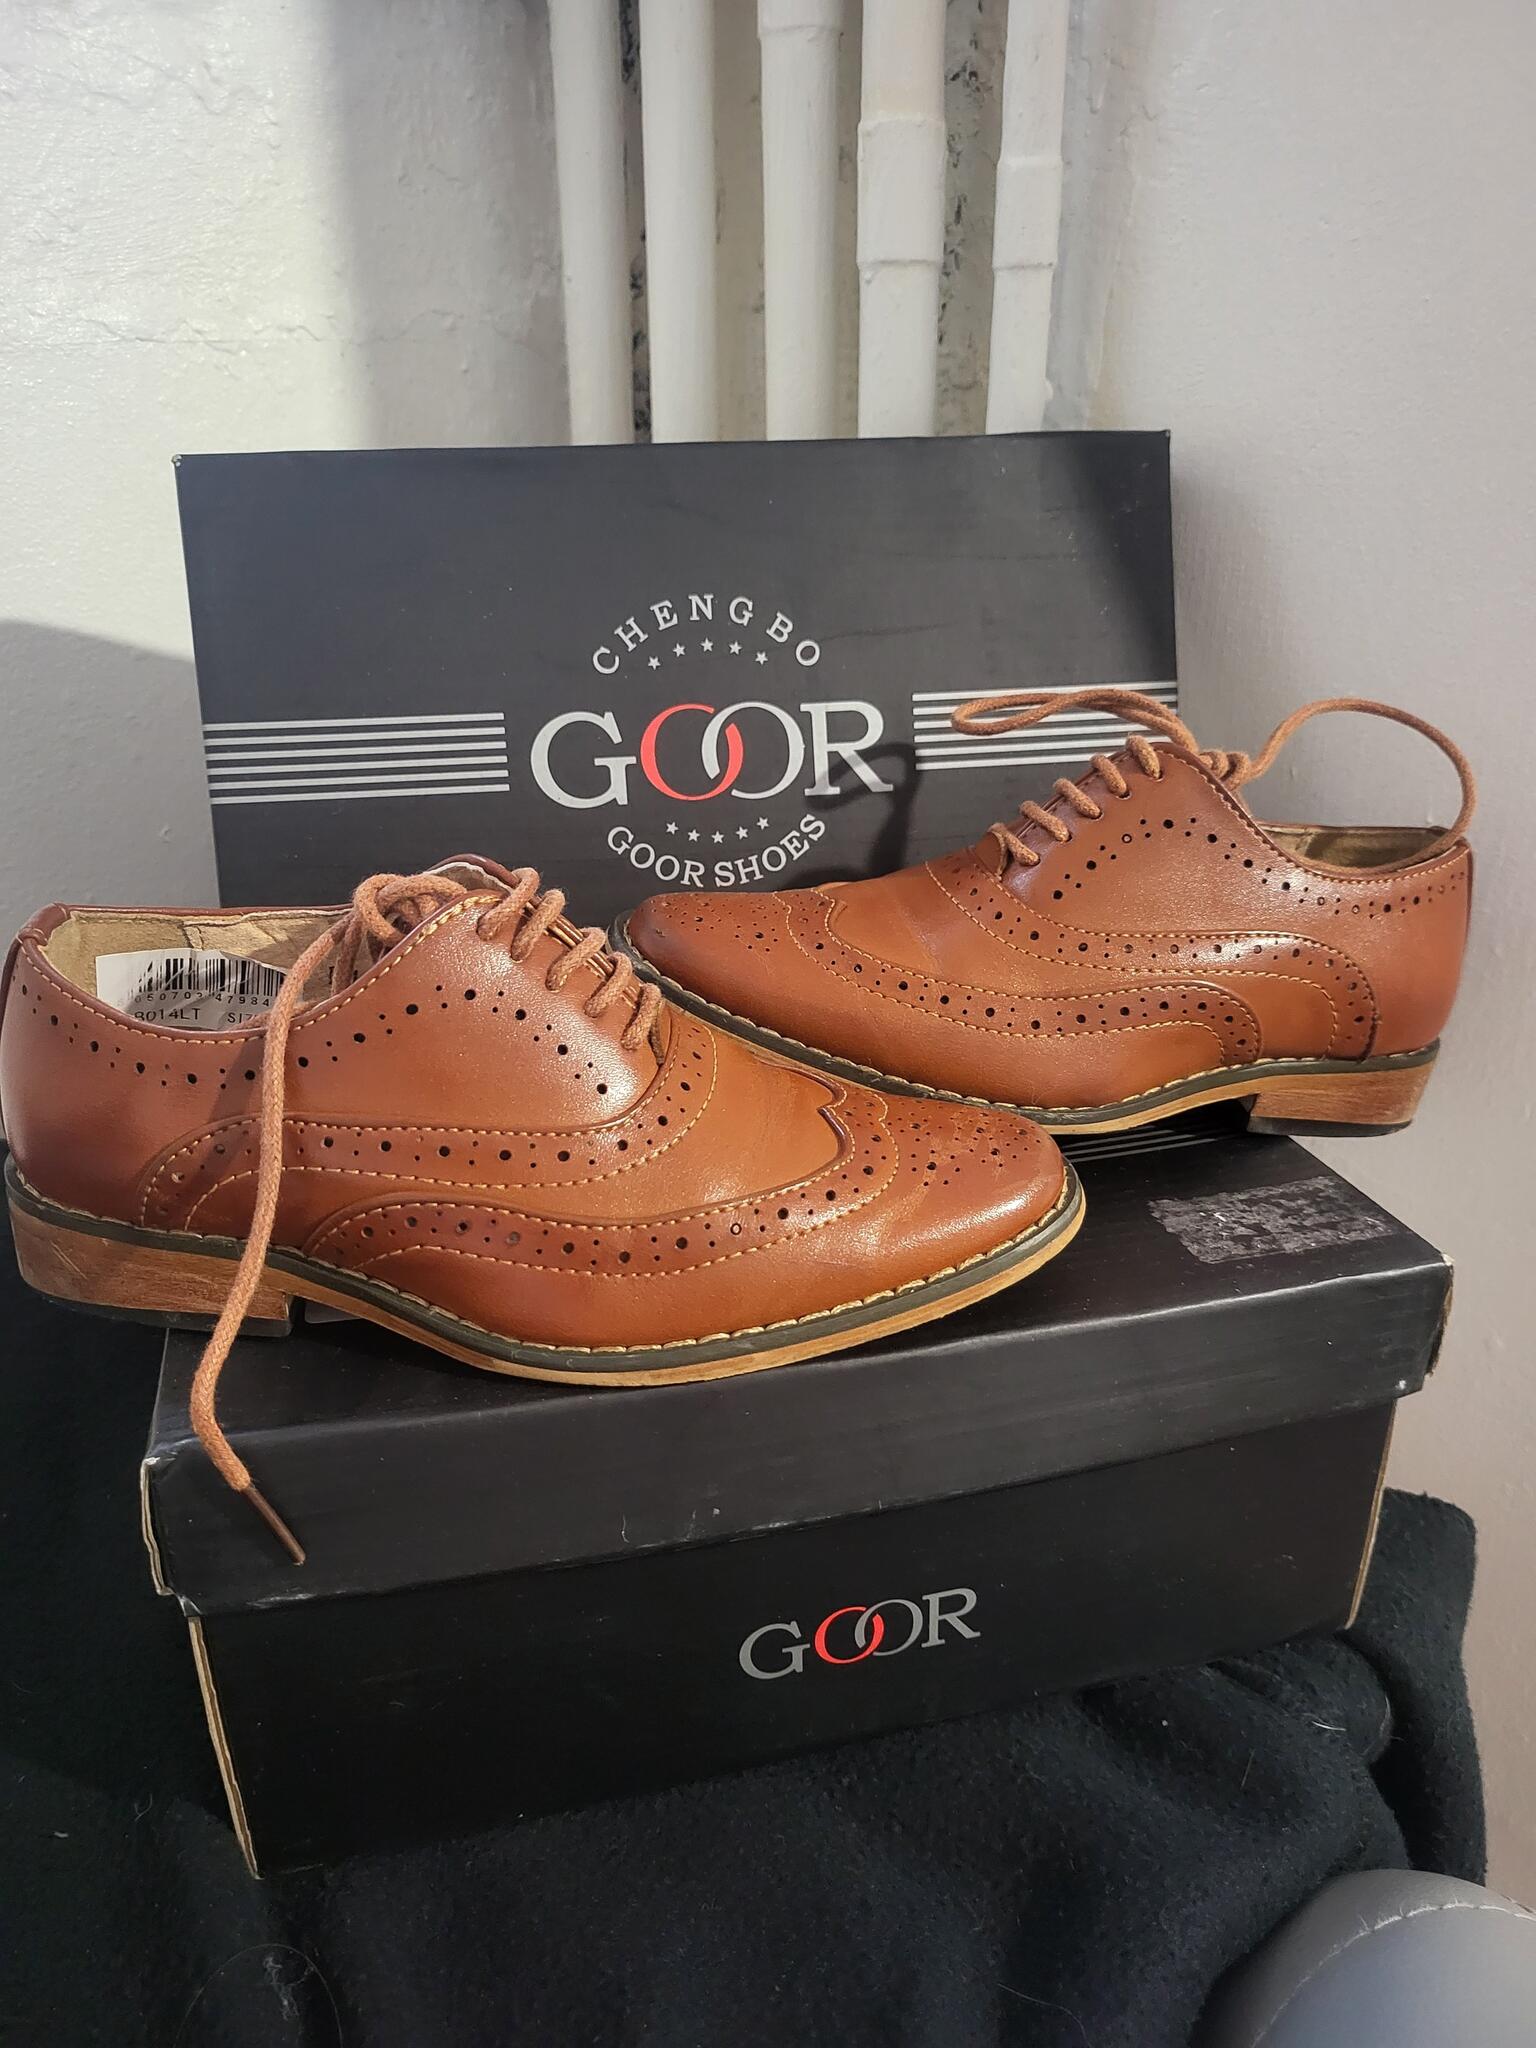 Goor Formal Mens Shoe Black  Hand Footwear Ltd